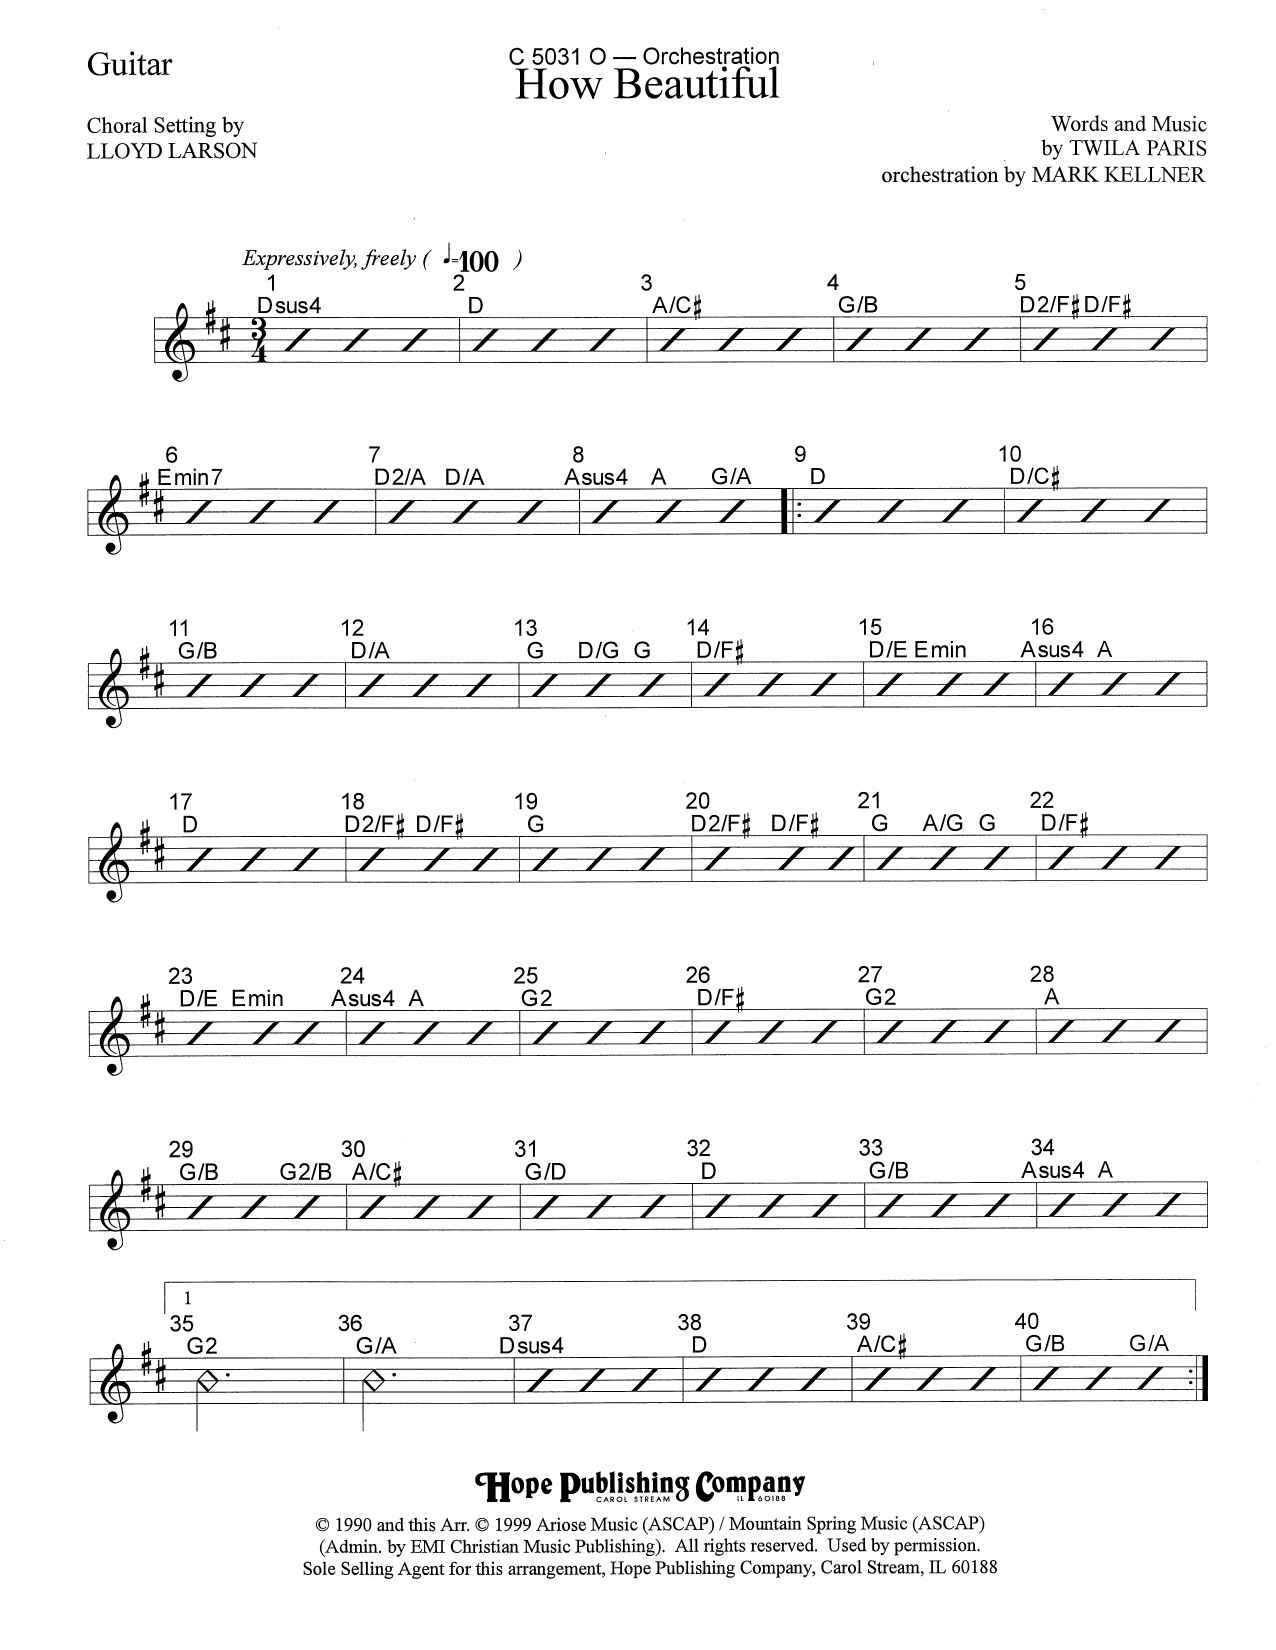 Download Mark Kellner How Beautiful - Guitar Sheet Music and learn how to play Choir Instrumental Pak PDF digital score in minutes